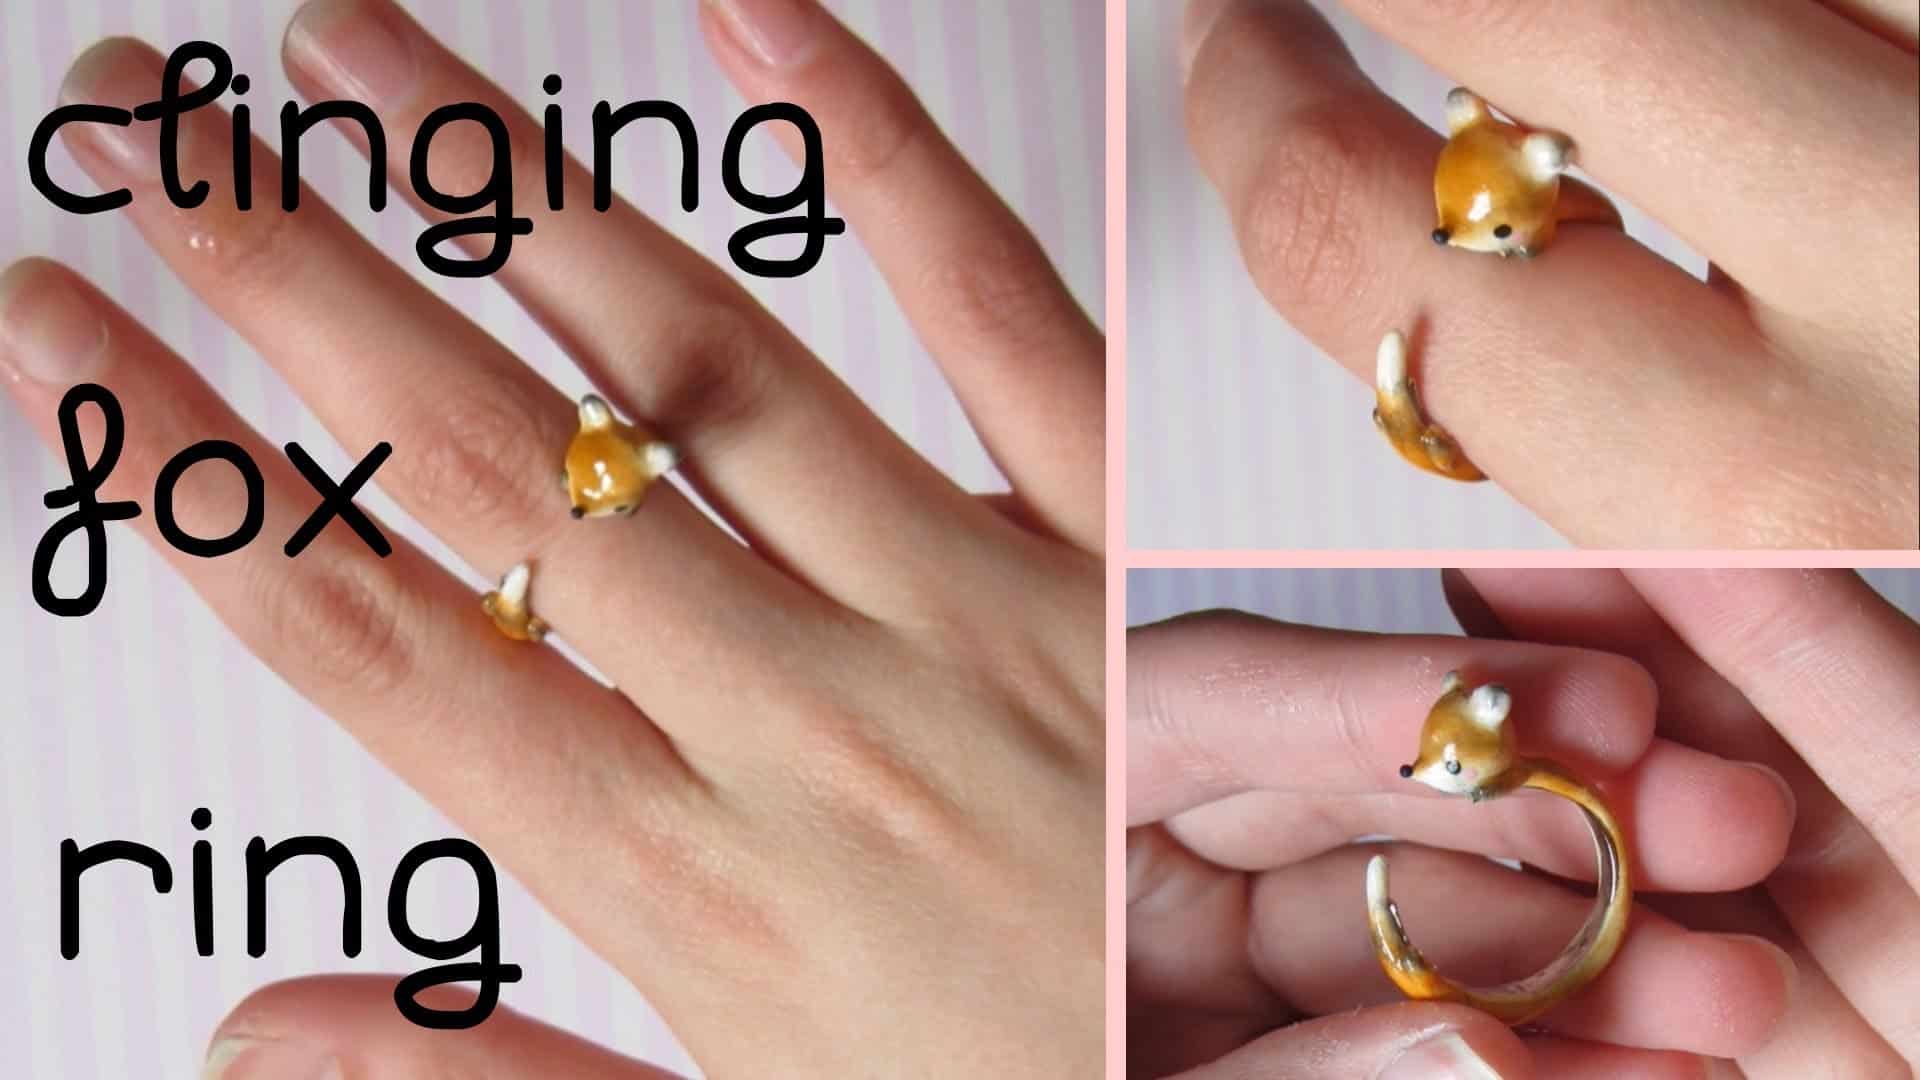 Clay Ring - clinging fox